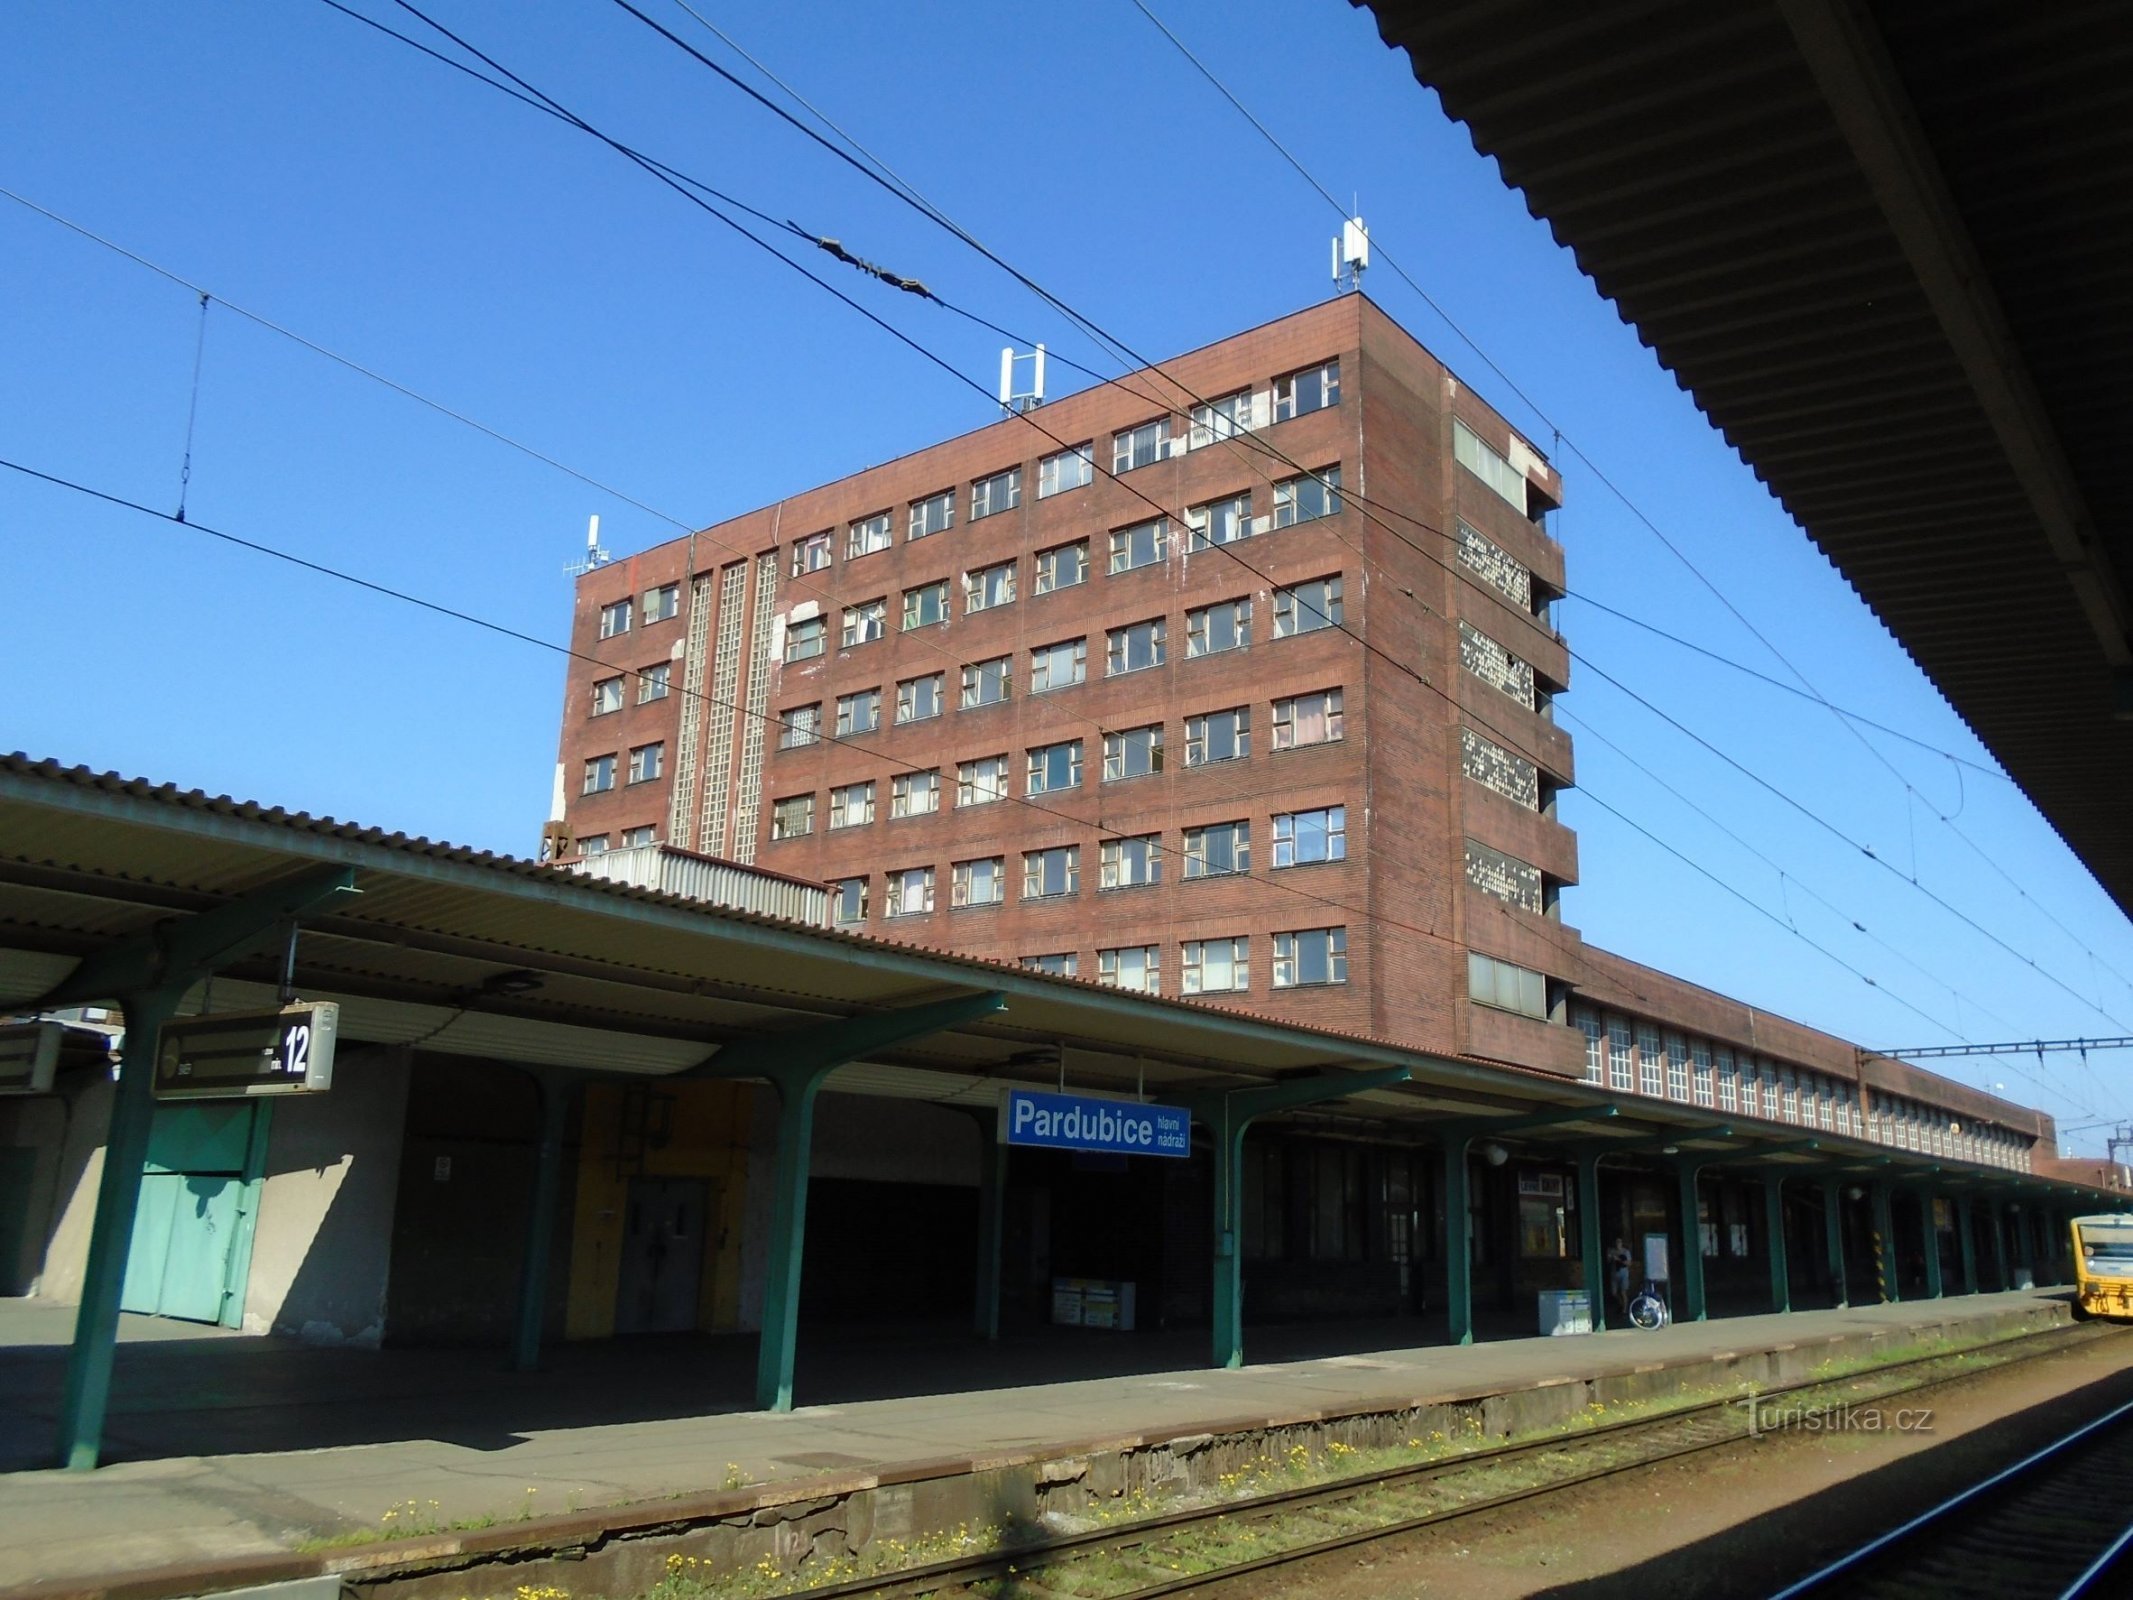 Centralstationen (Pardubice, 18.4.2018/XNUMX/XNUMX)